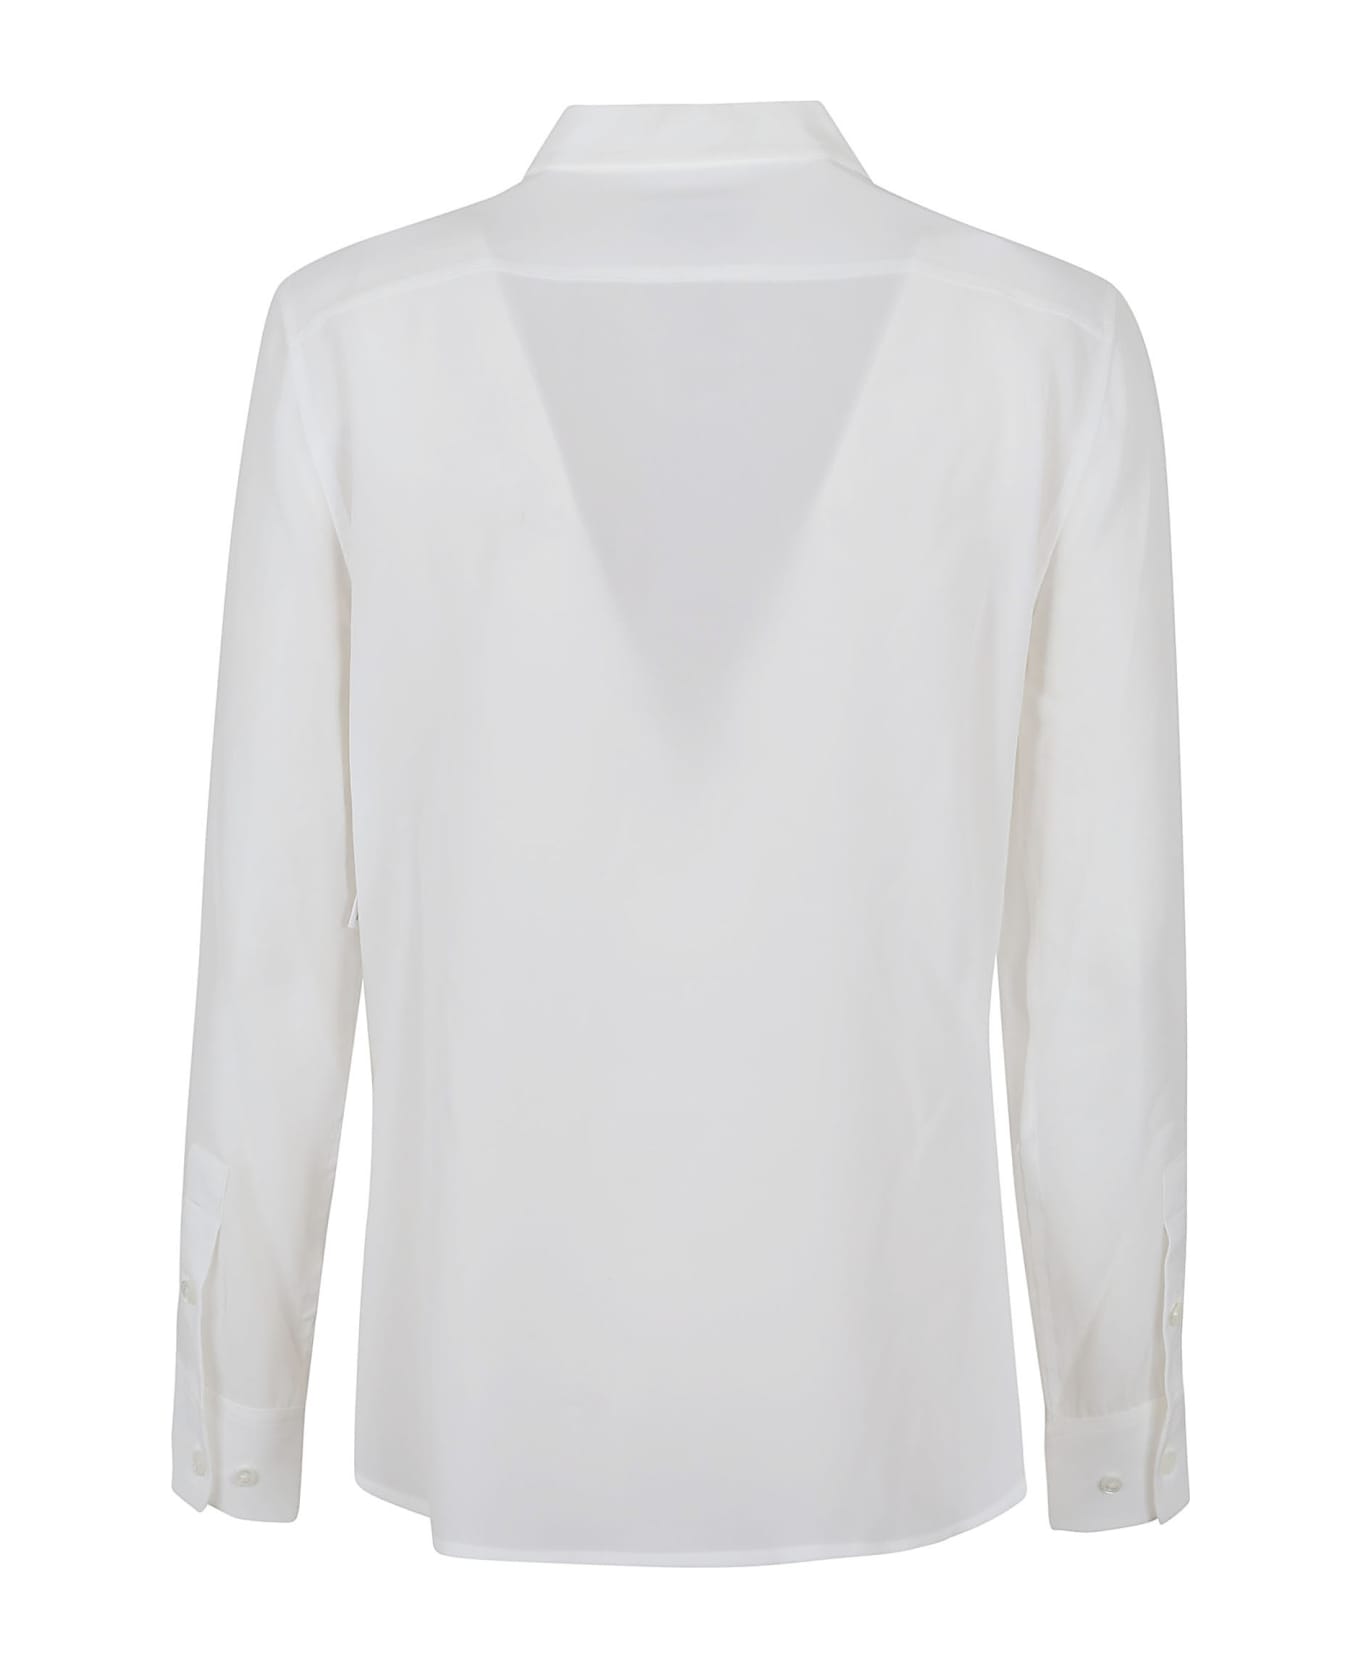 Equipment Leema Women Shirt Long Sleeves - Bright Wht Bright White